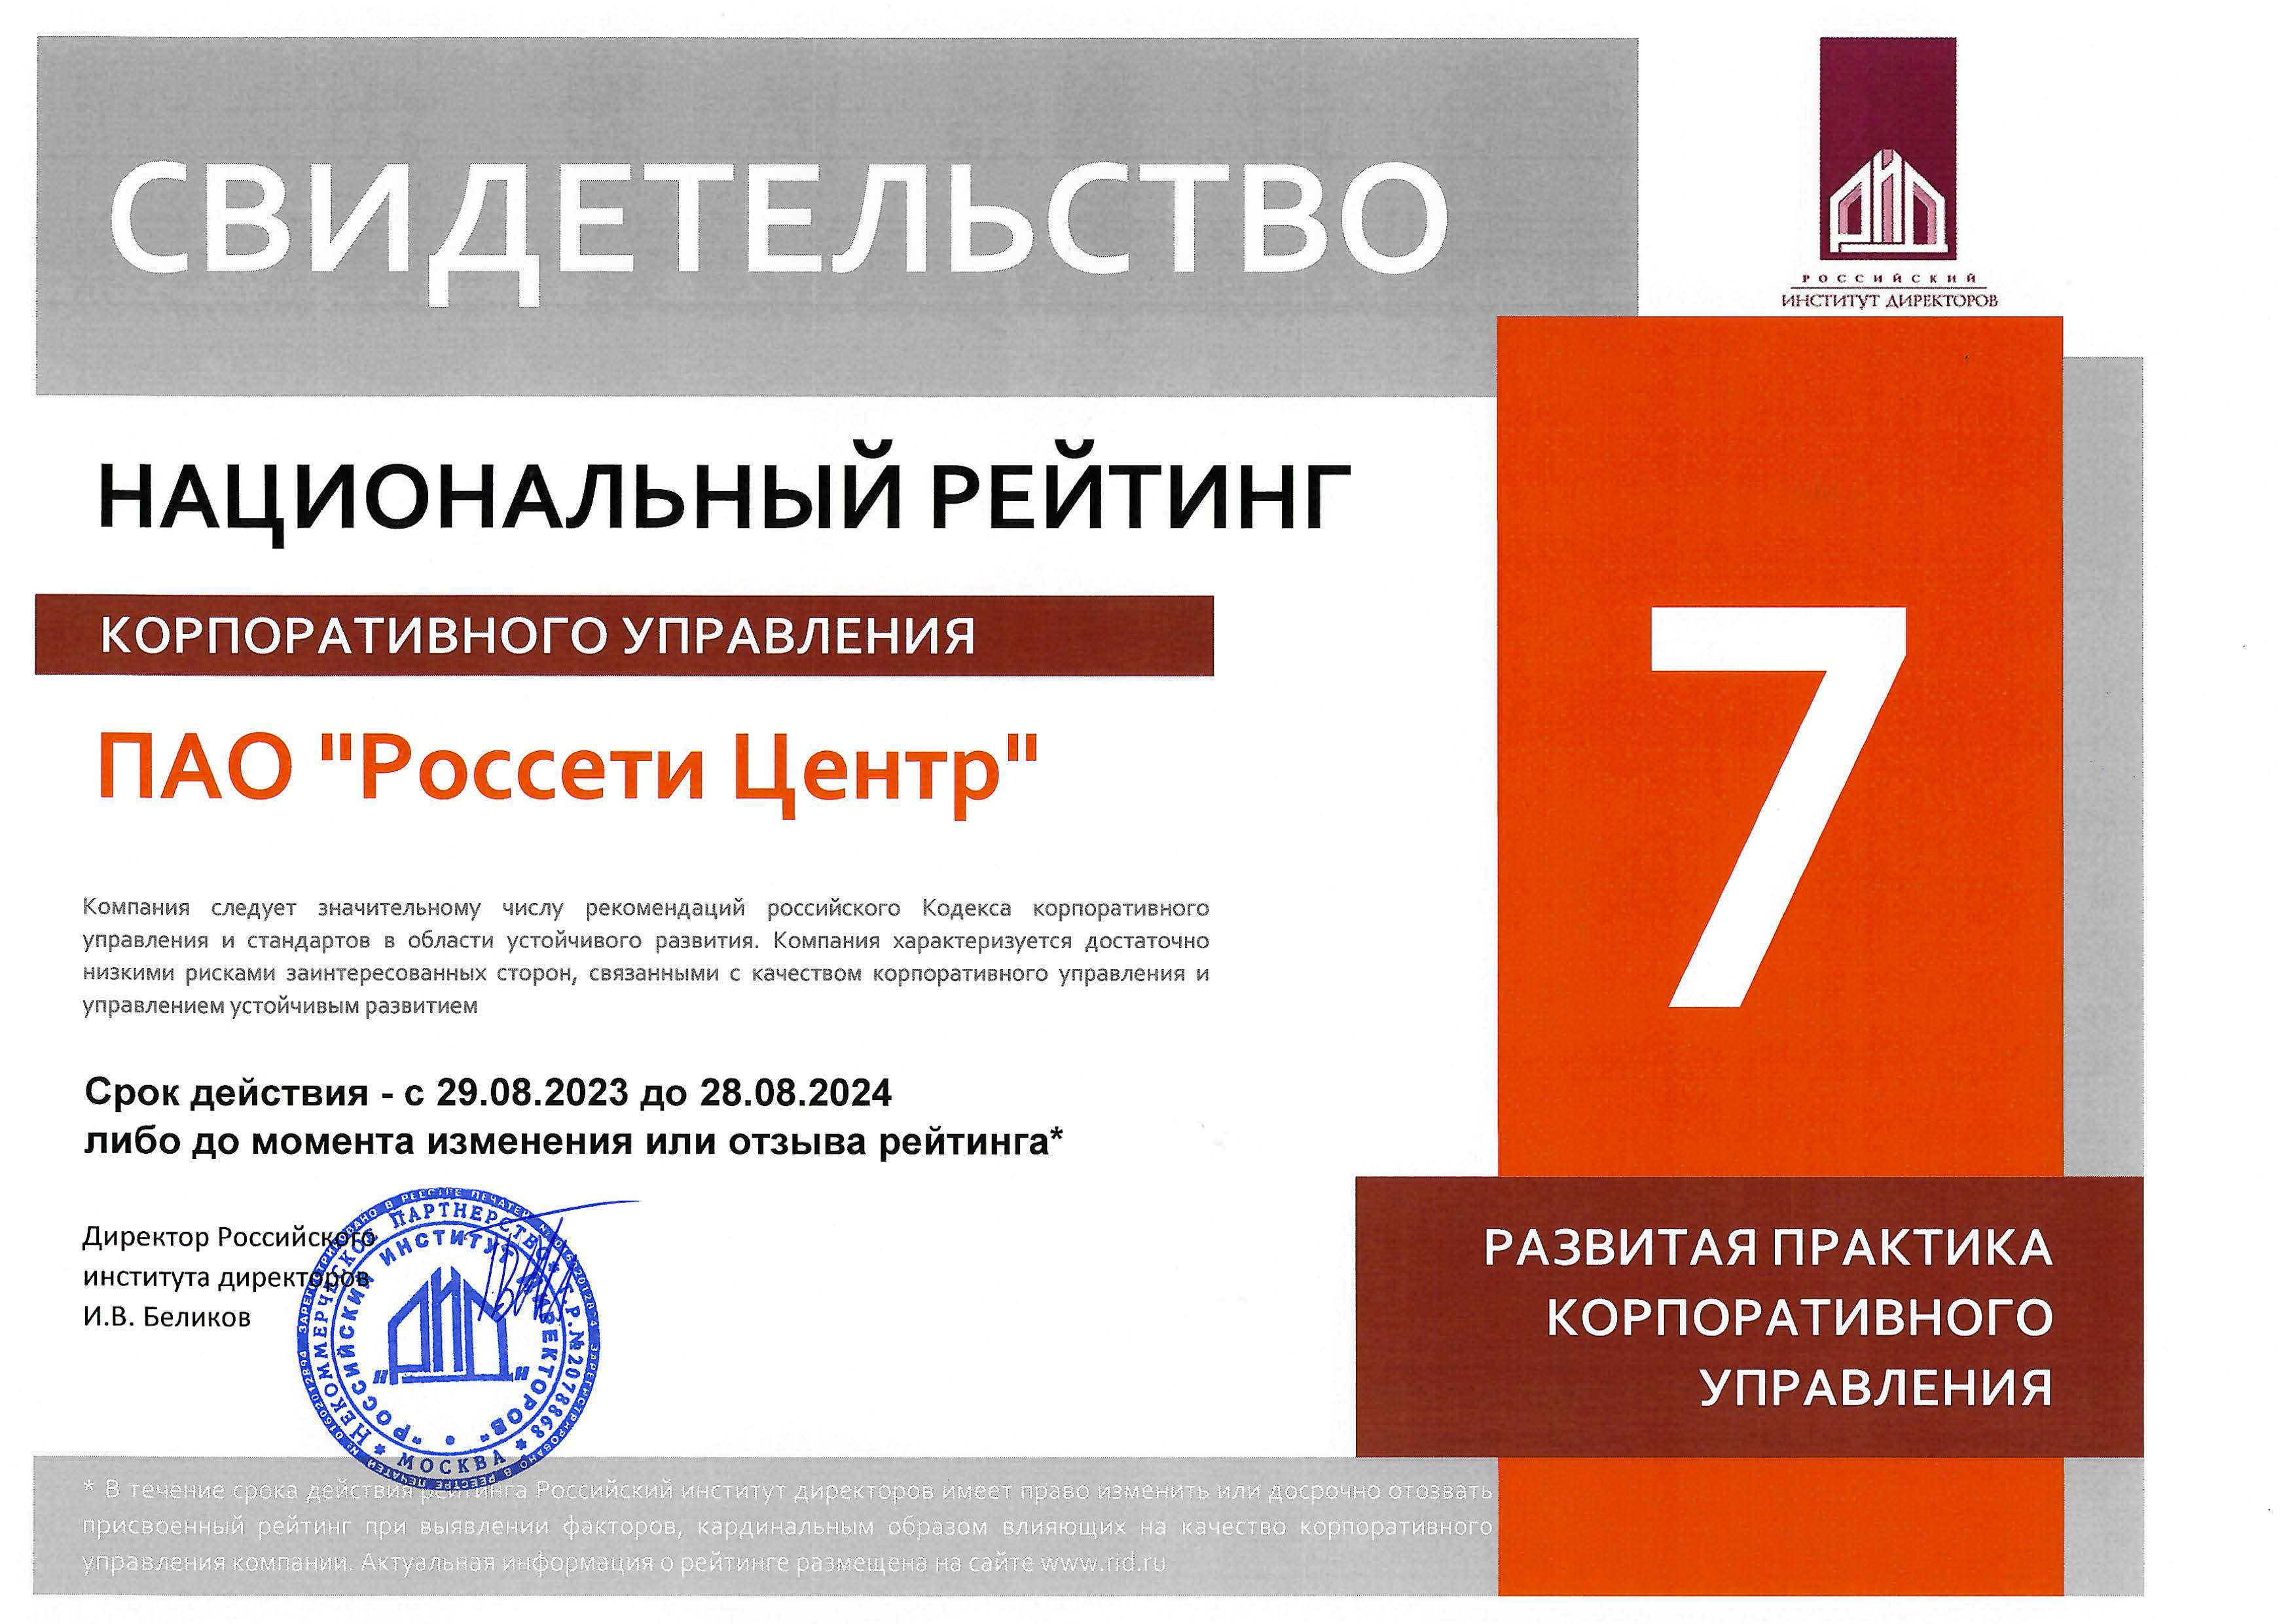 Certificate_29.08.2023.jpg